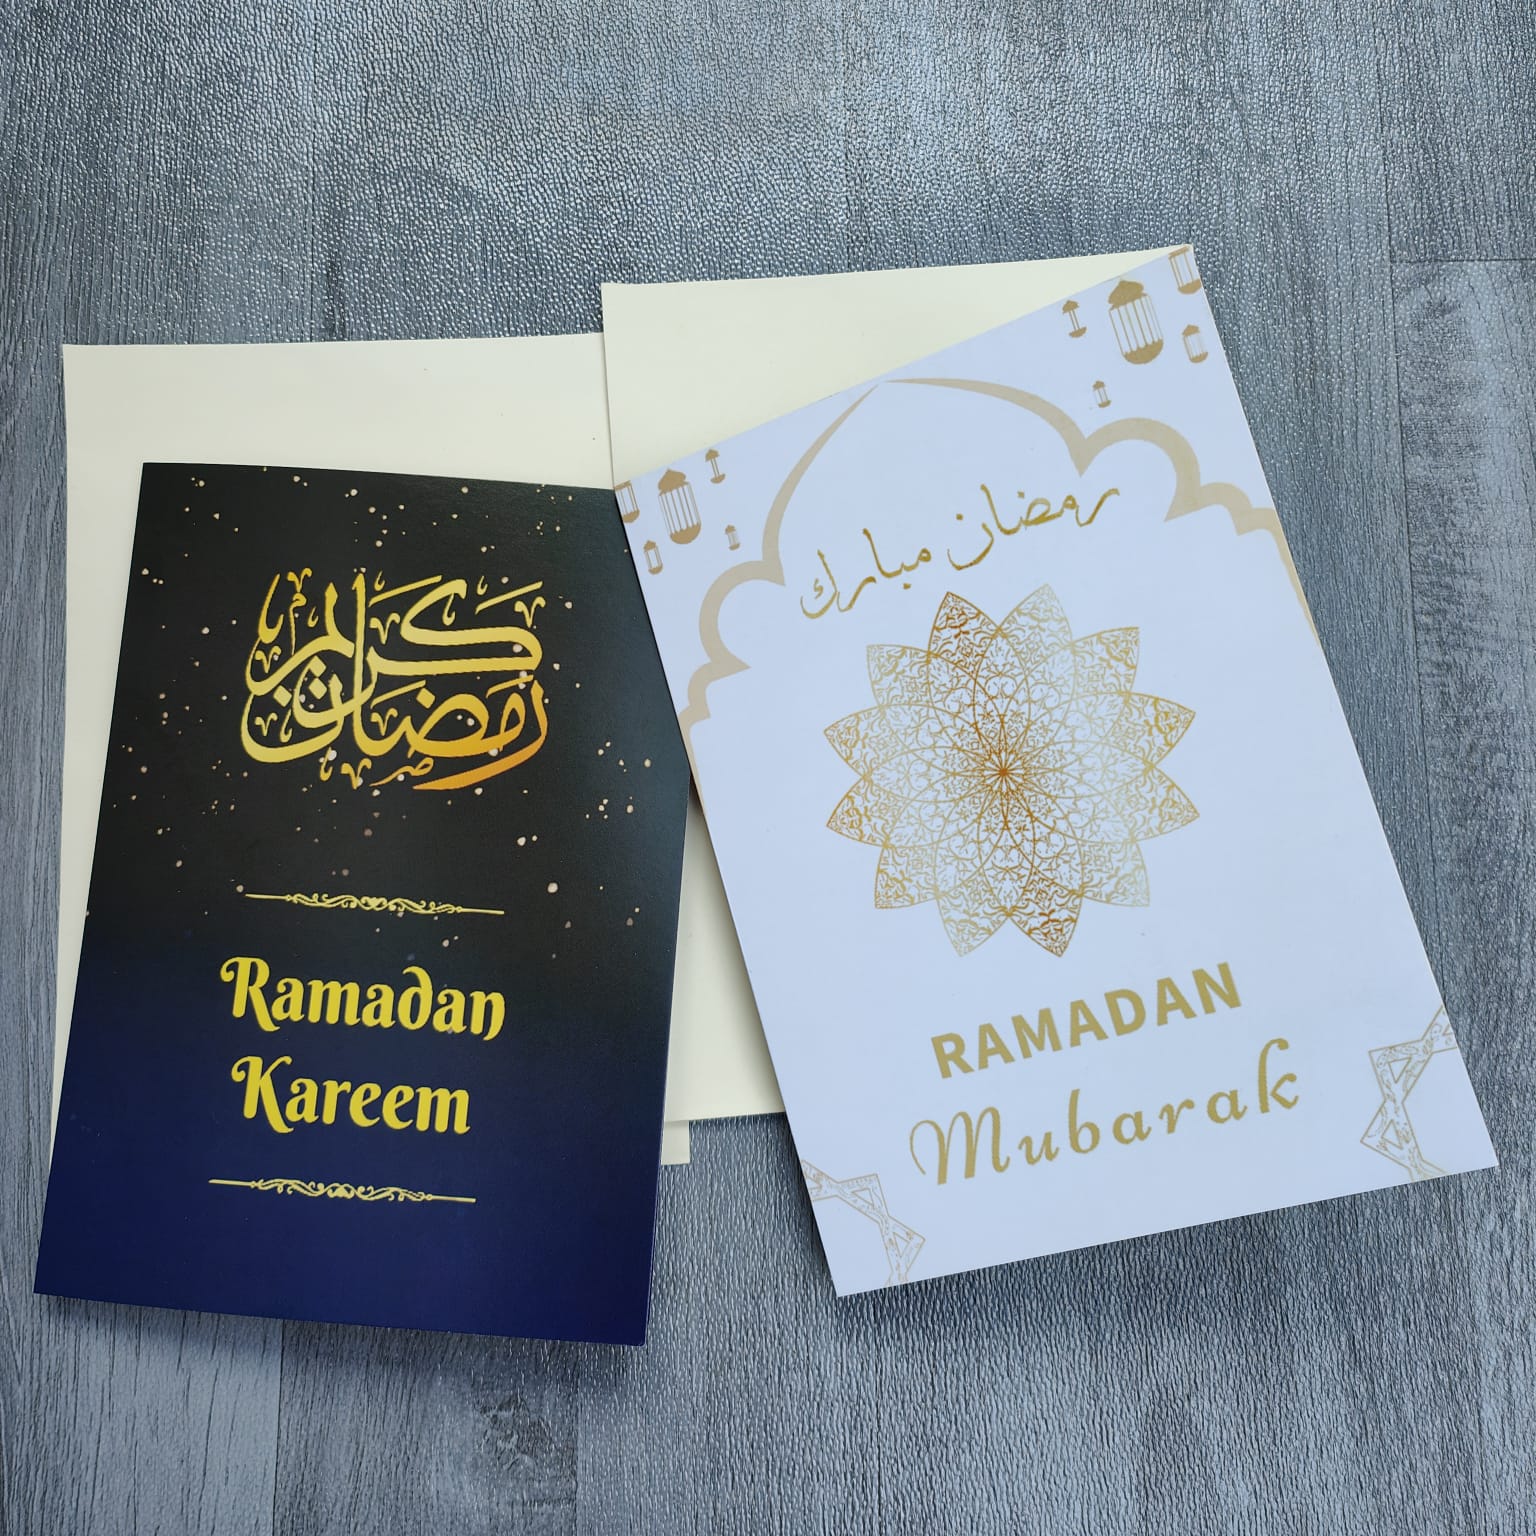 Ramadan scents: Bakhoor among region's most-loved gifts